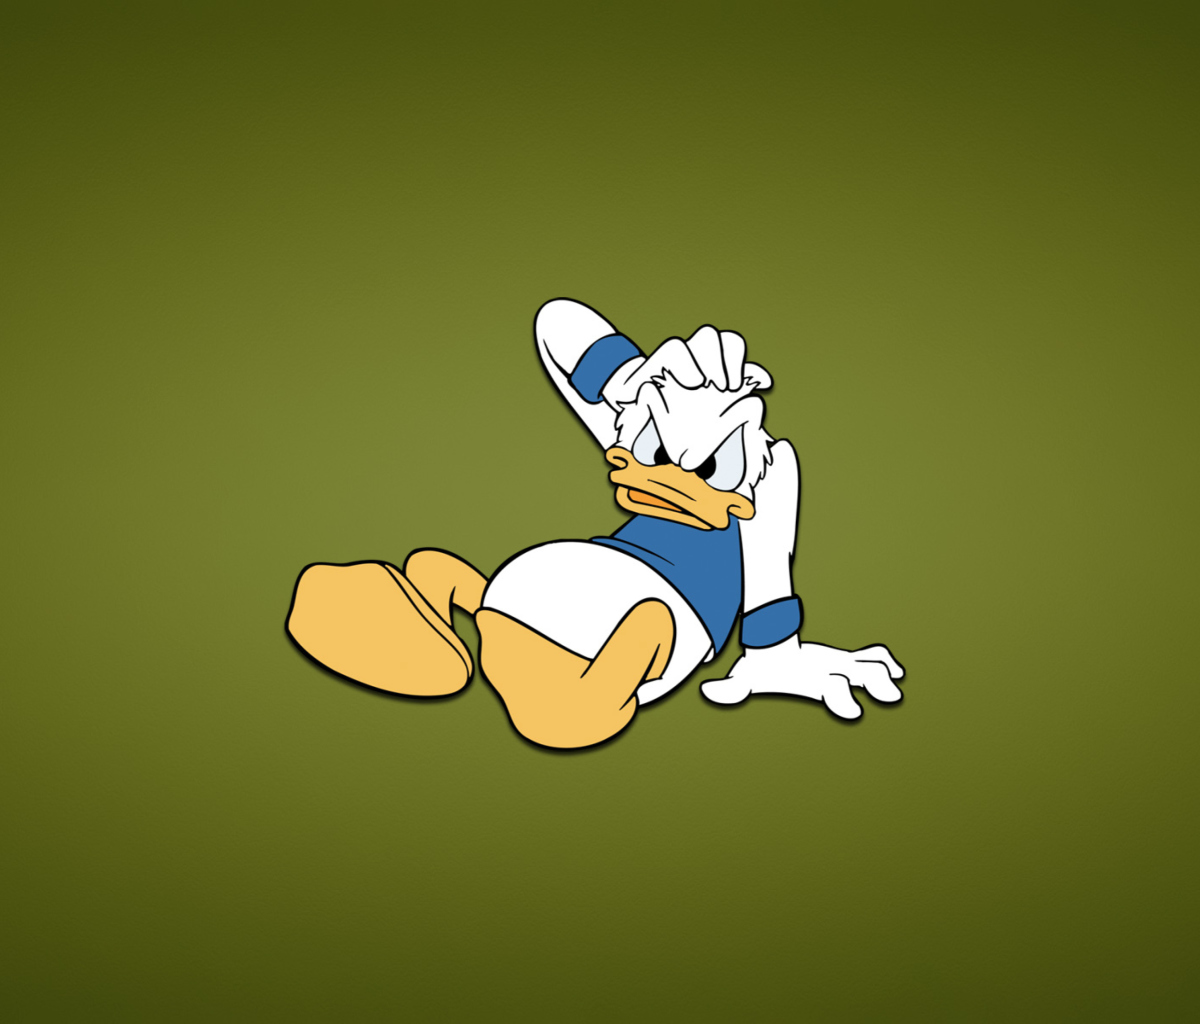 Funny Donald Duck wallpaper 1200x1024